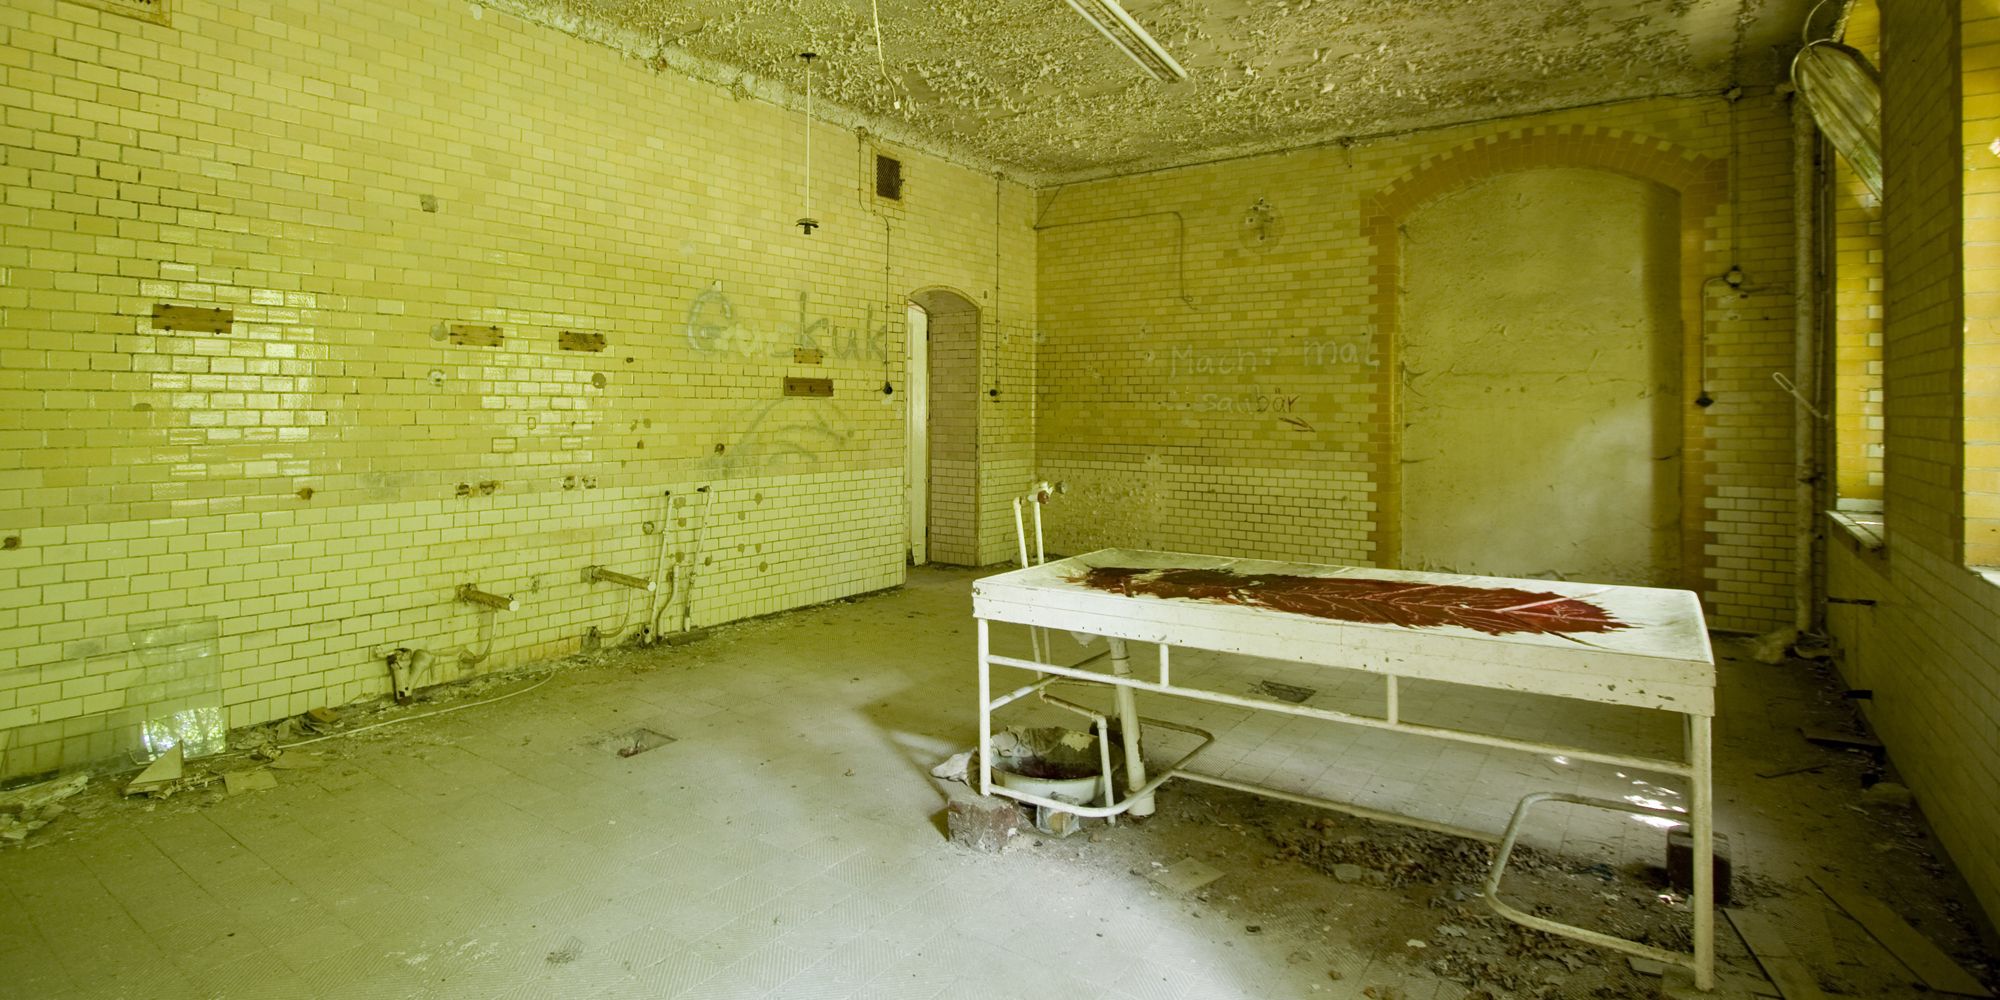 18 Haunting Photos Of An Abandoned Nazi Hospital Beelitz